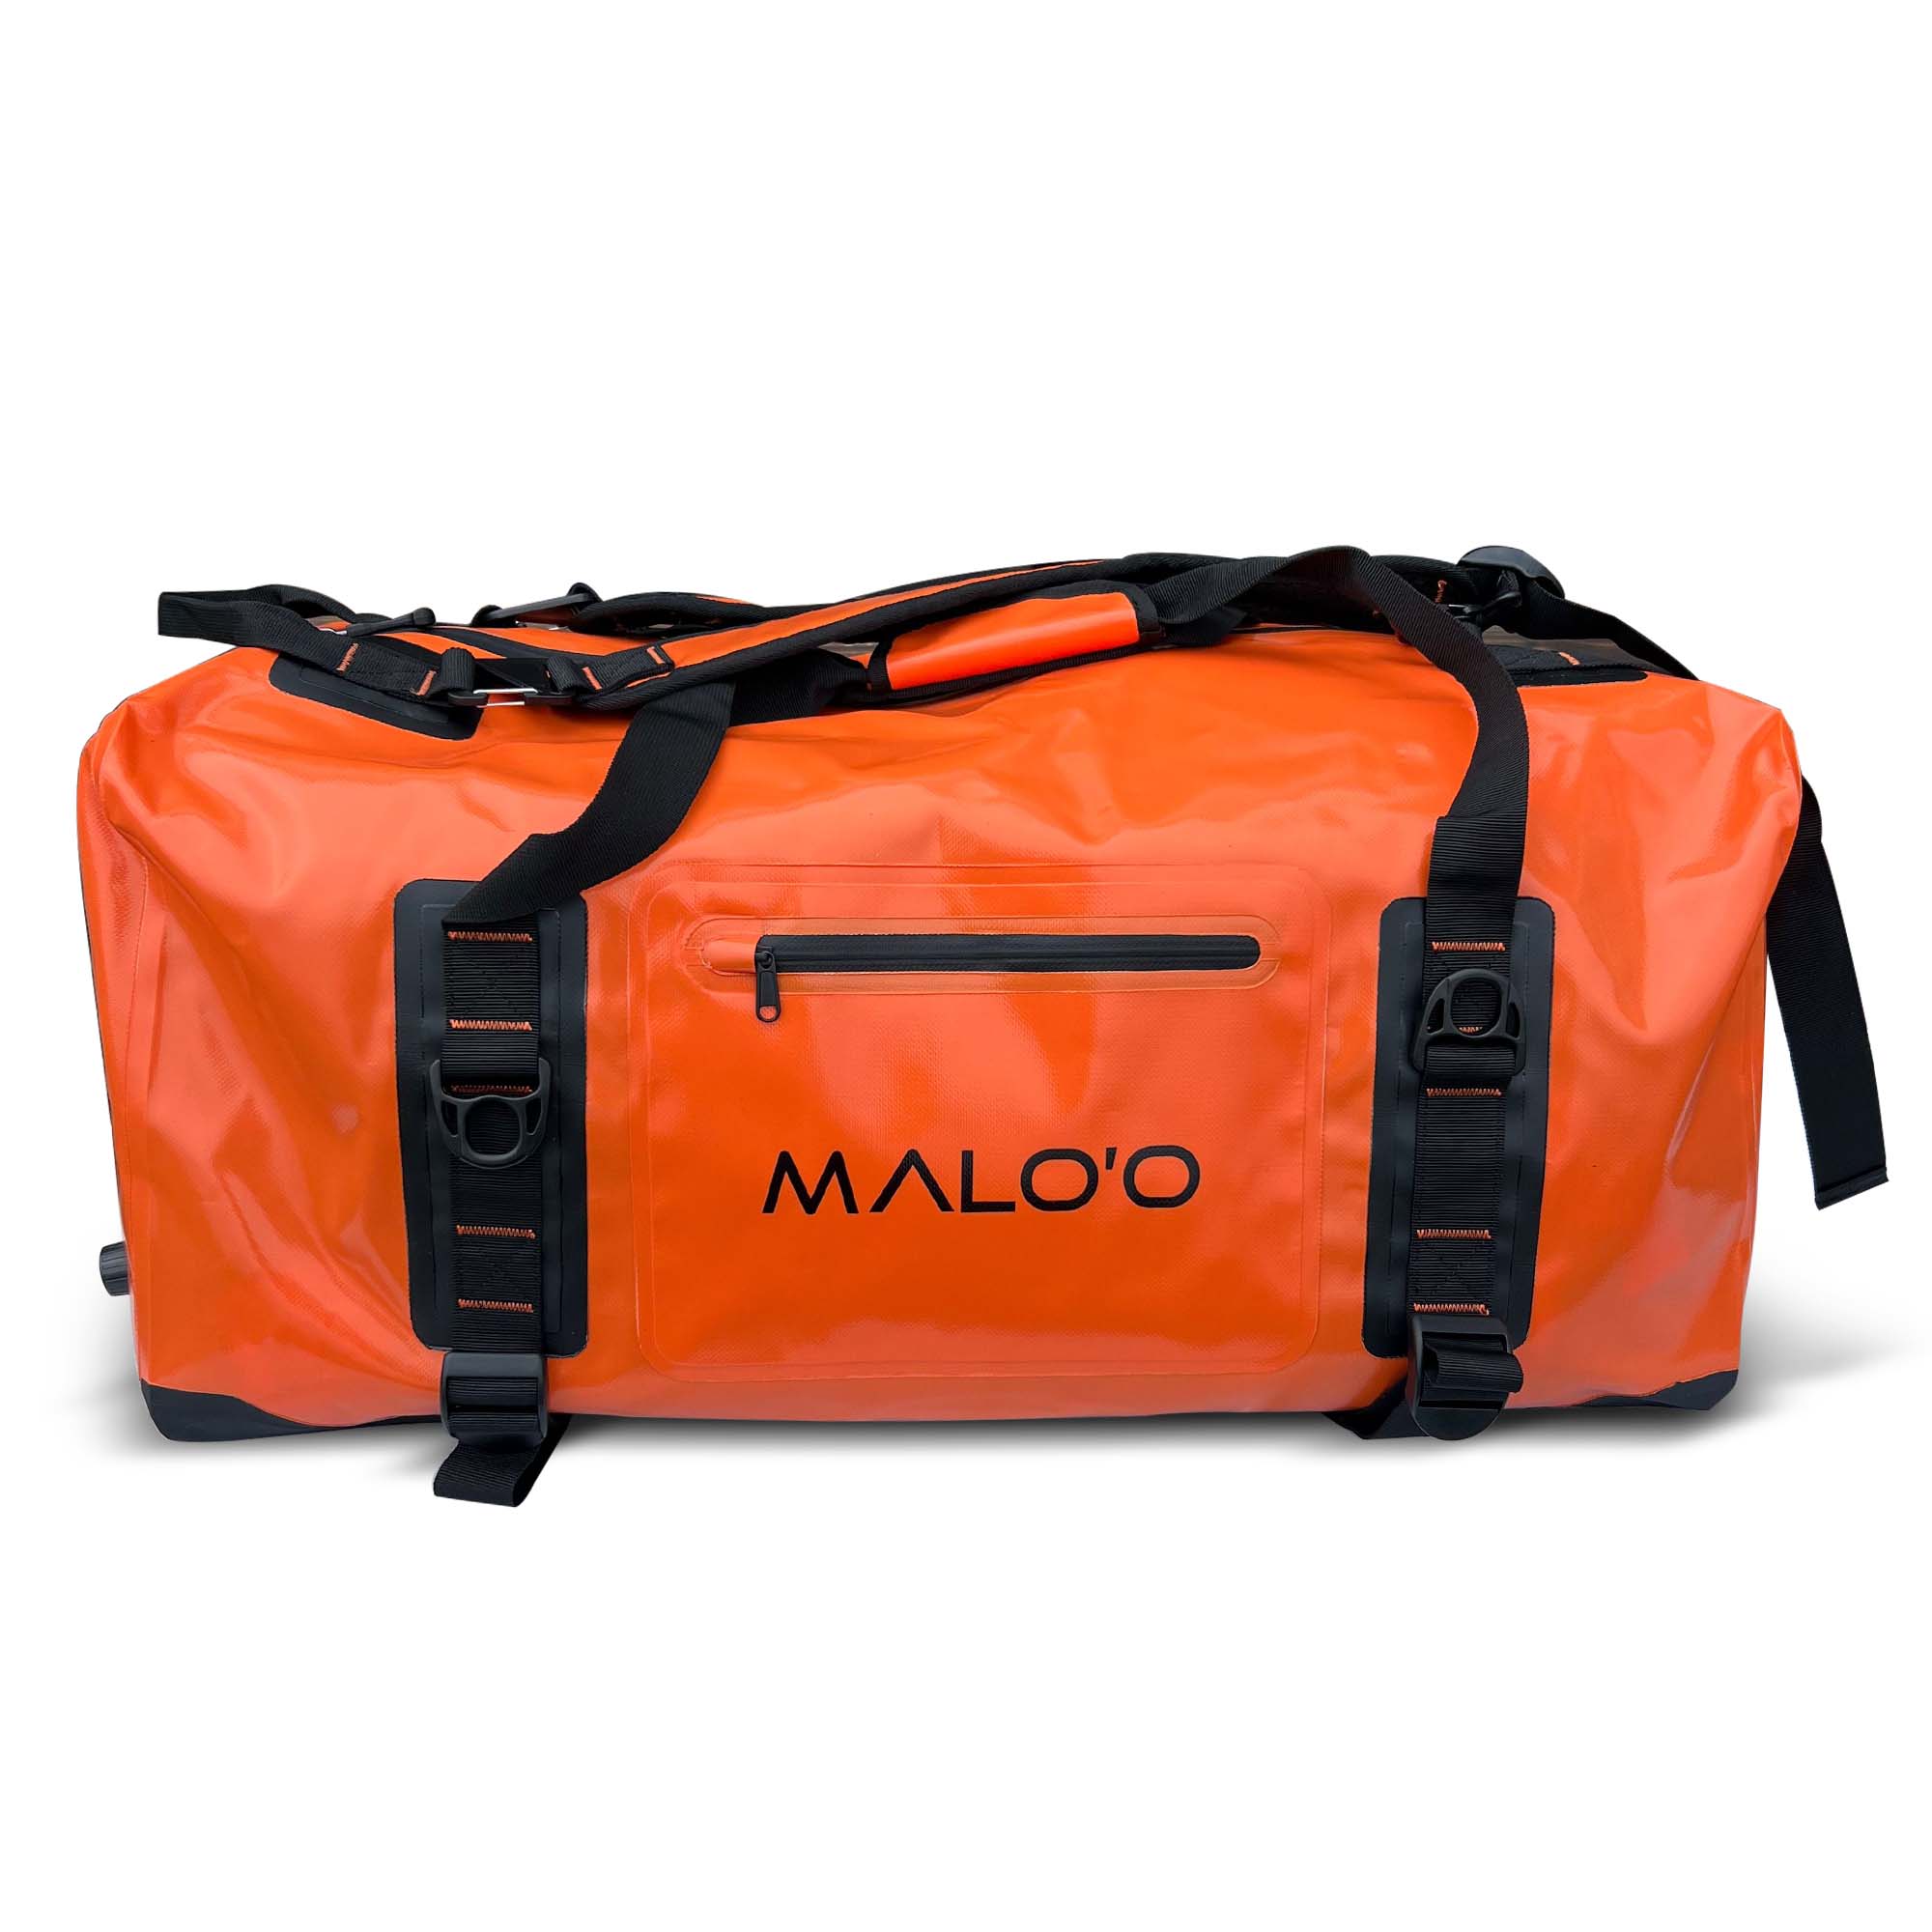 Malo'o Drypack Roll Top Waterproof Bag Dark Green / Large - 40 Liter